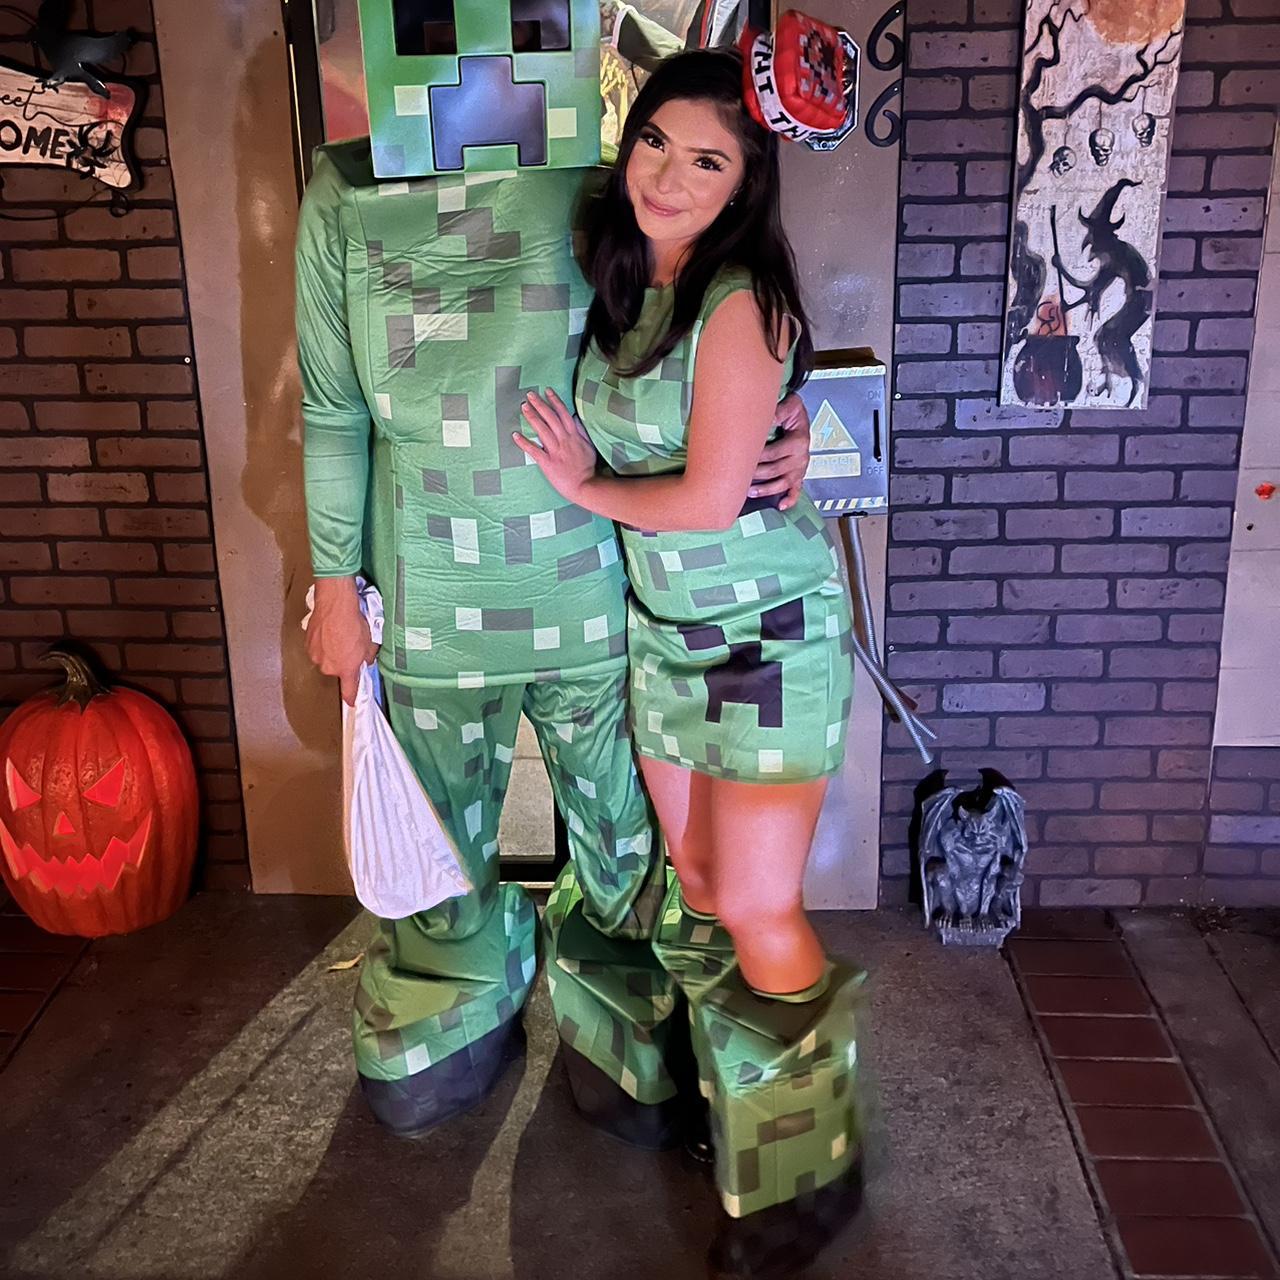 Women's Minecraft Creeper Costume